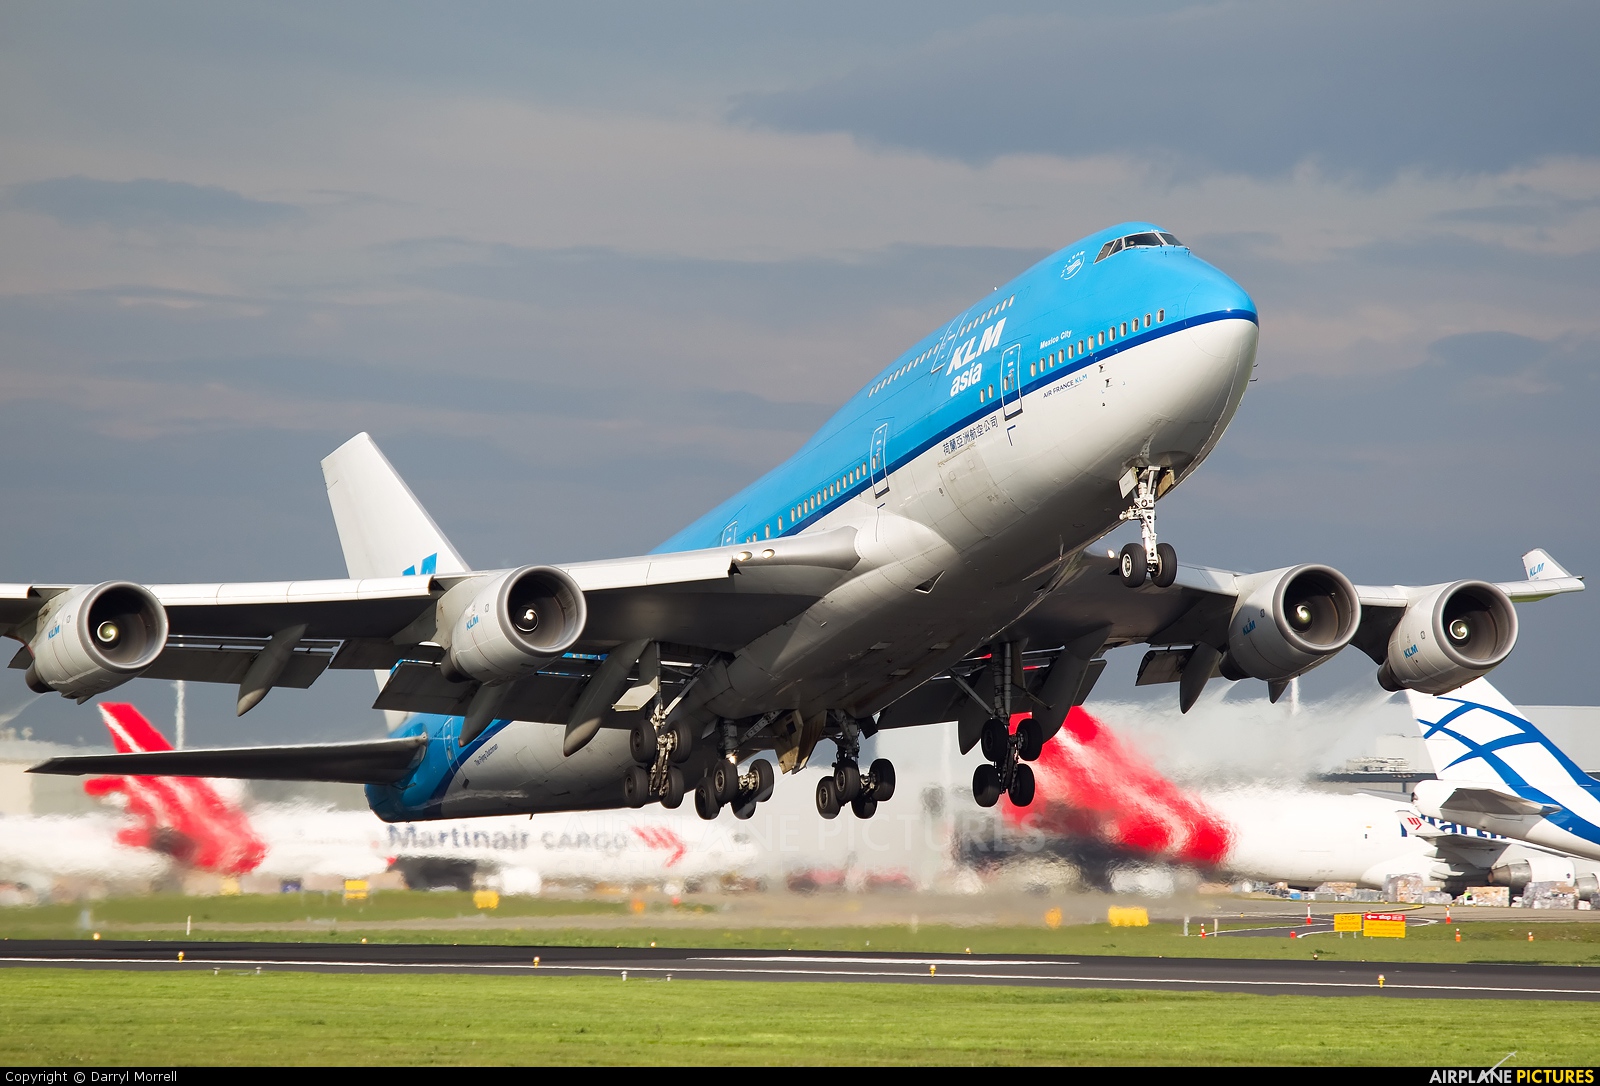 KLM Asia PH-BFM aircraft at Amsterdam - Schiphol